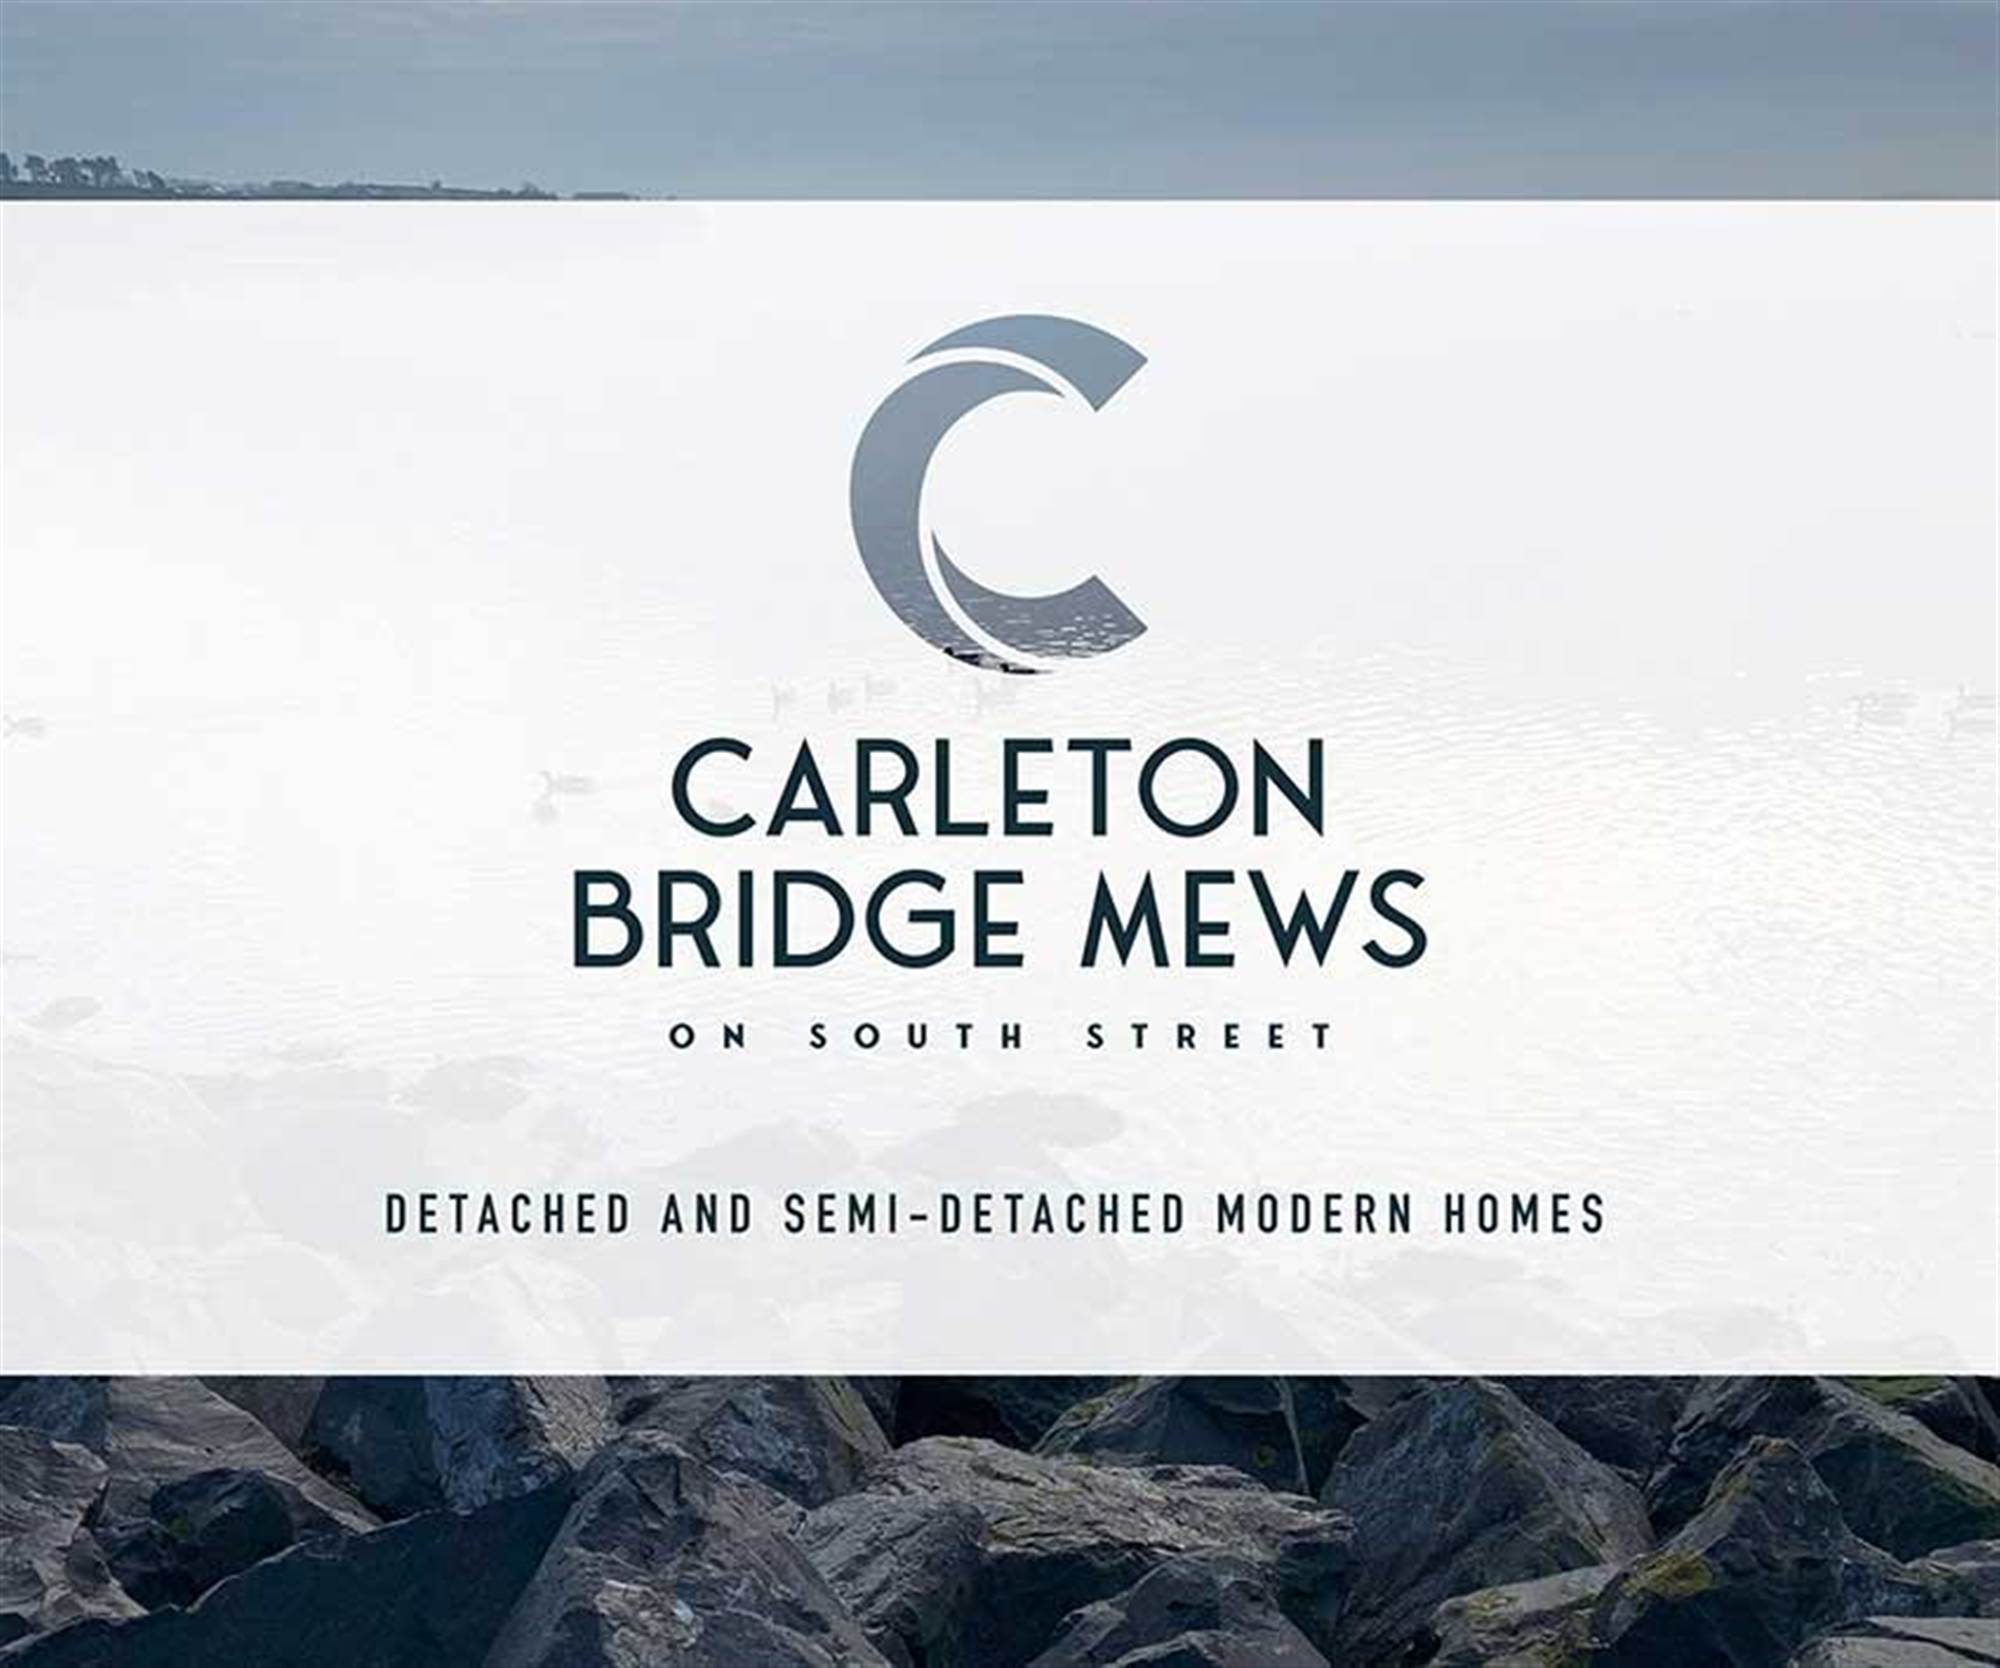 14 Carleton Bridge Mews